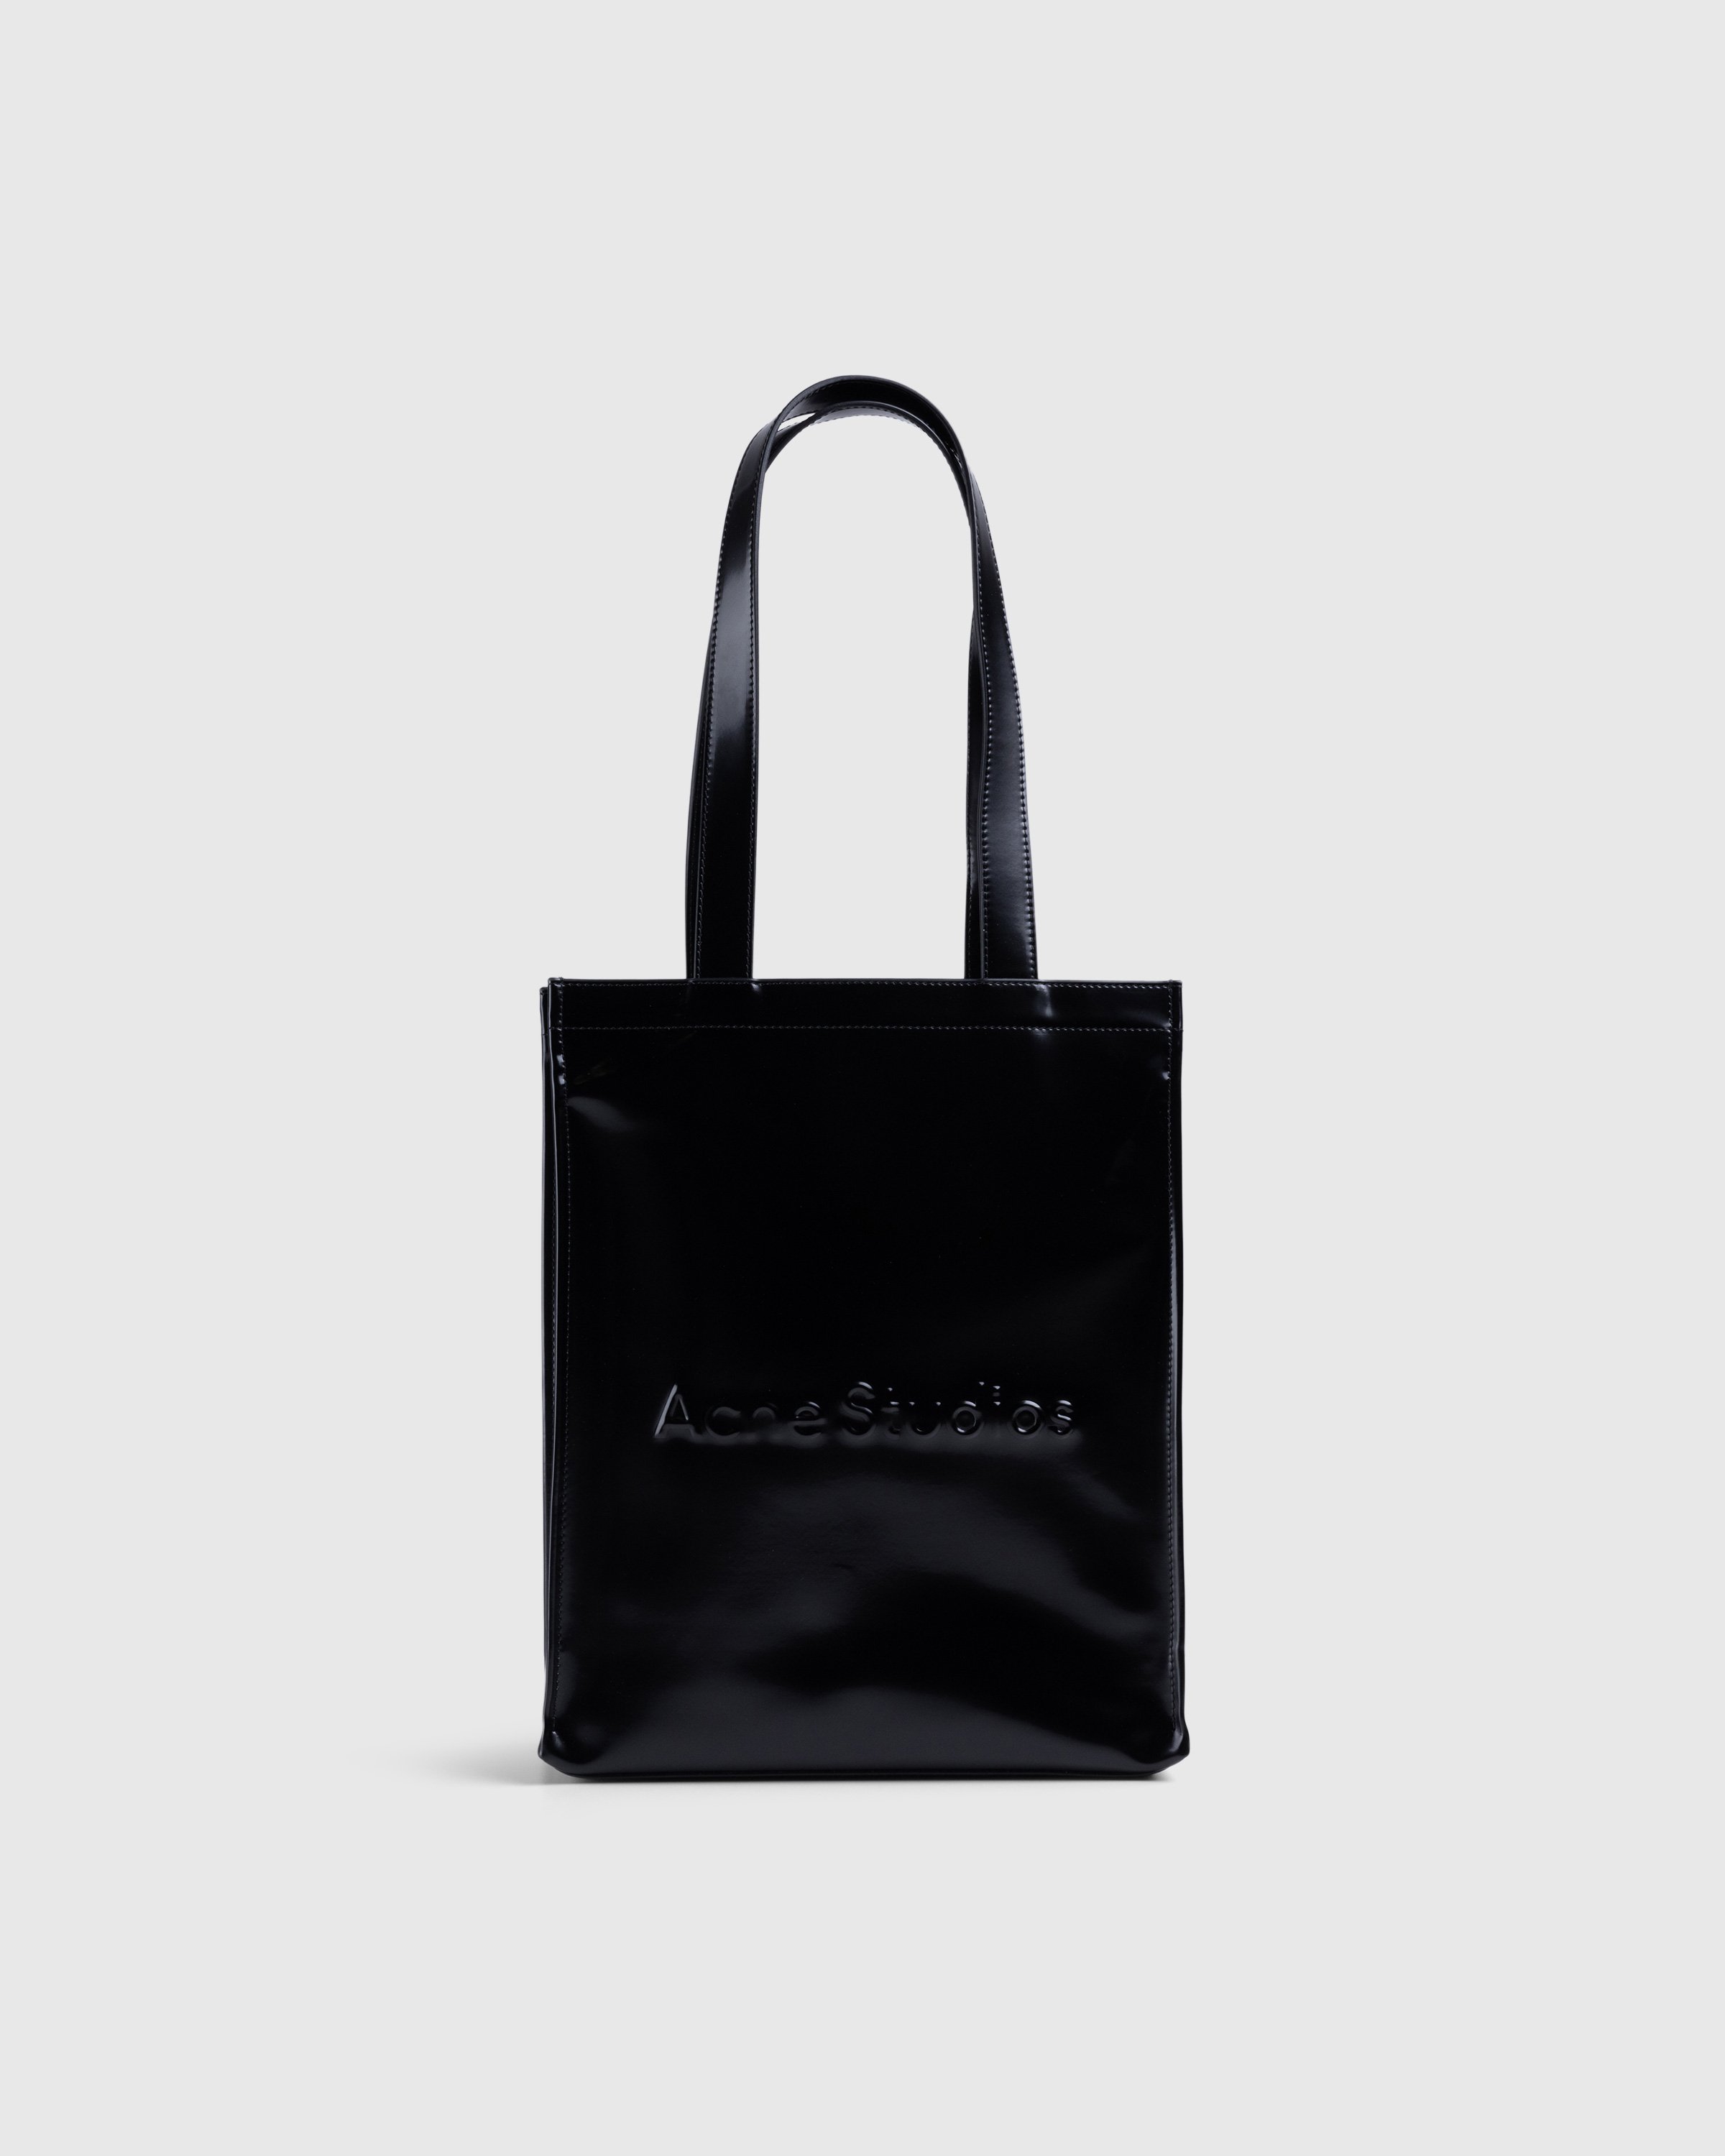 Acne Studios - Logo Shoulder Tote Bag Black - Accessories - Black - Image 1